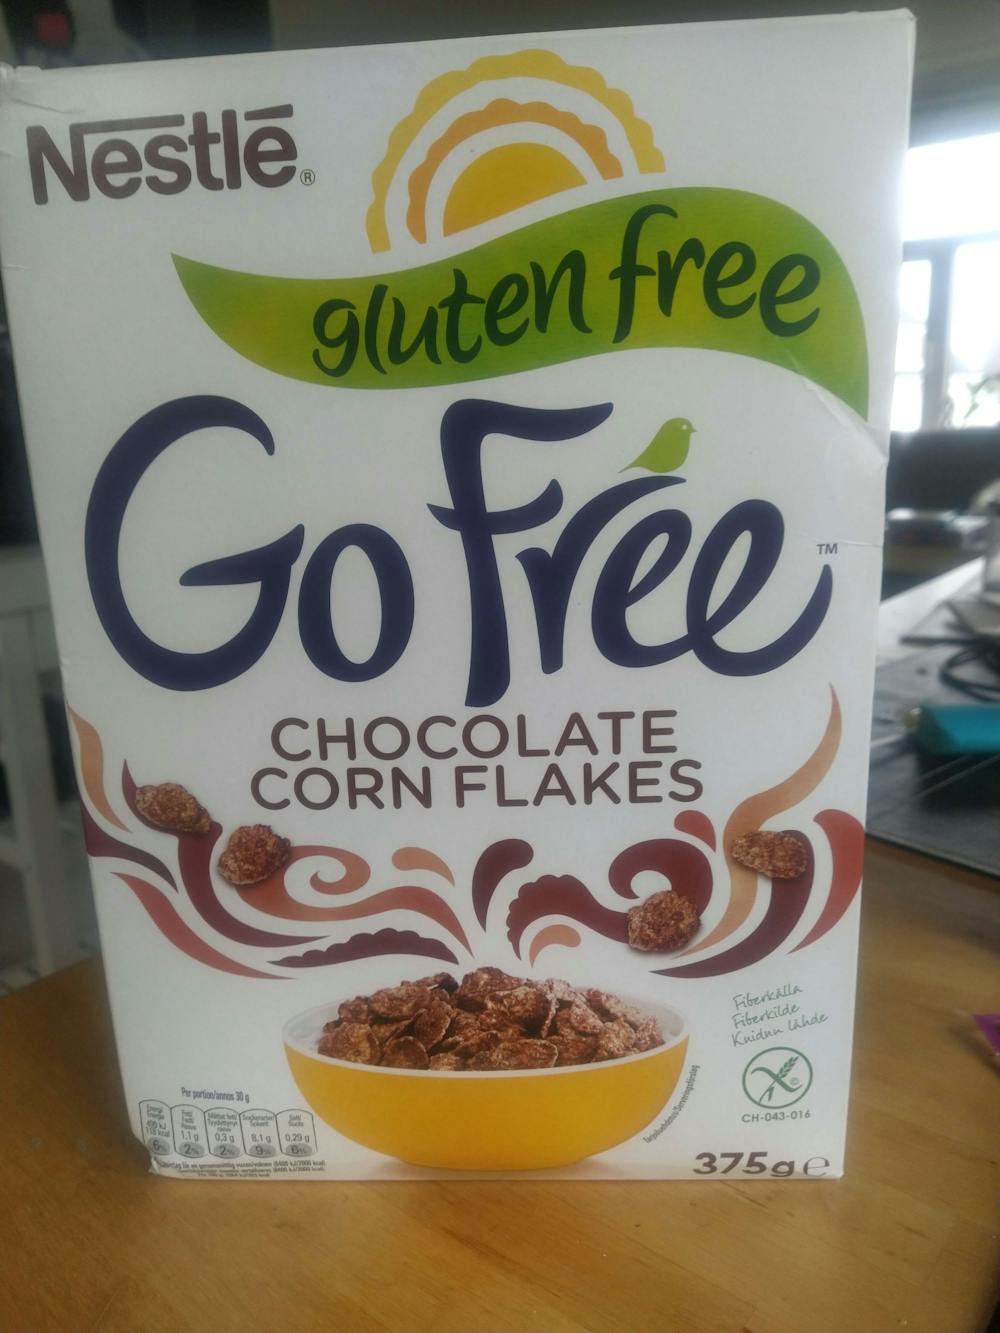 Chocolate corn flakes, Go free